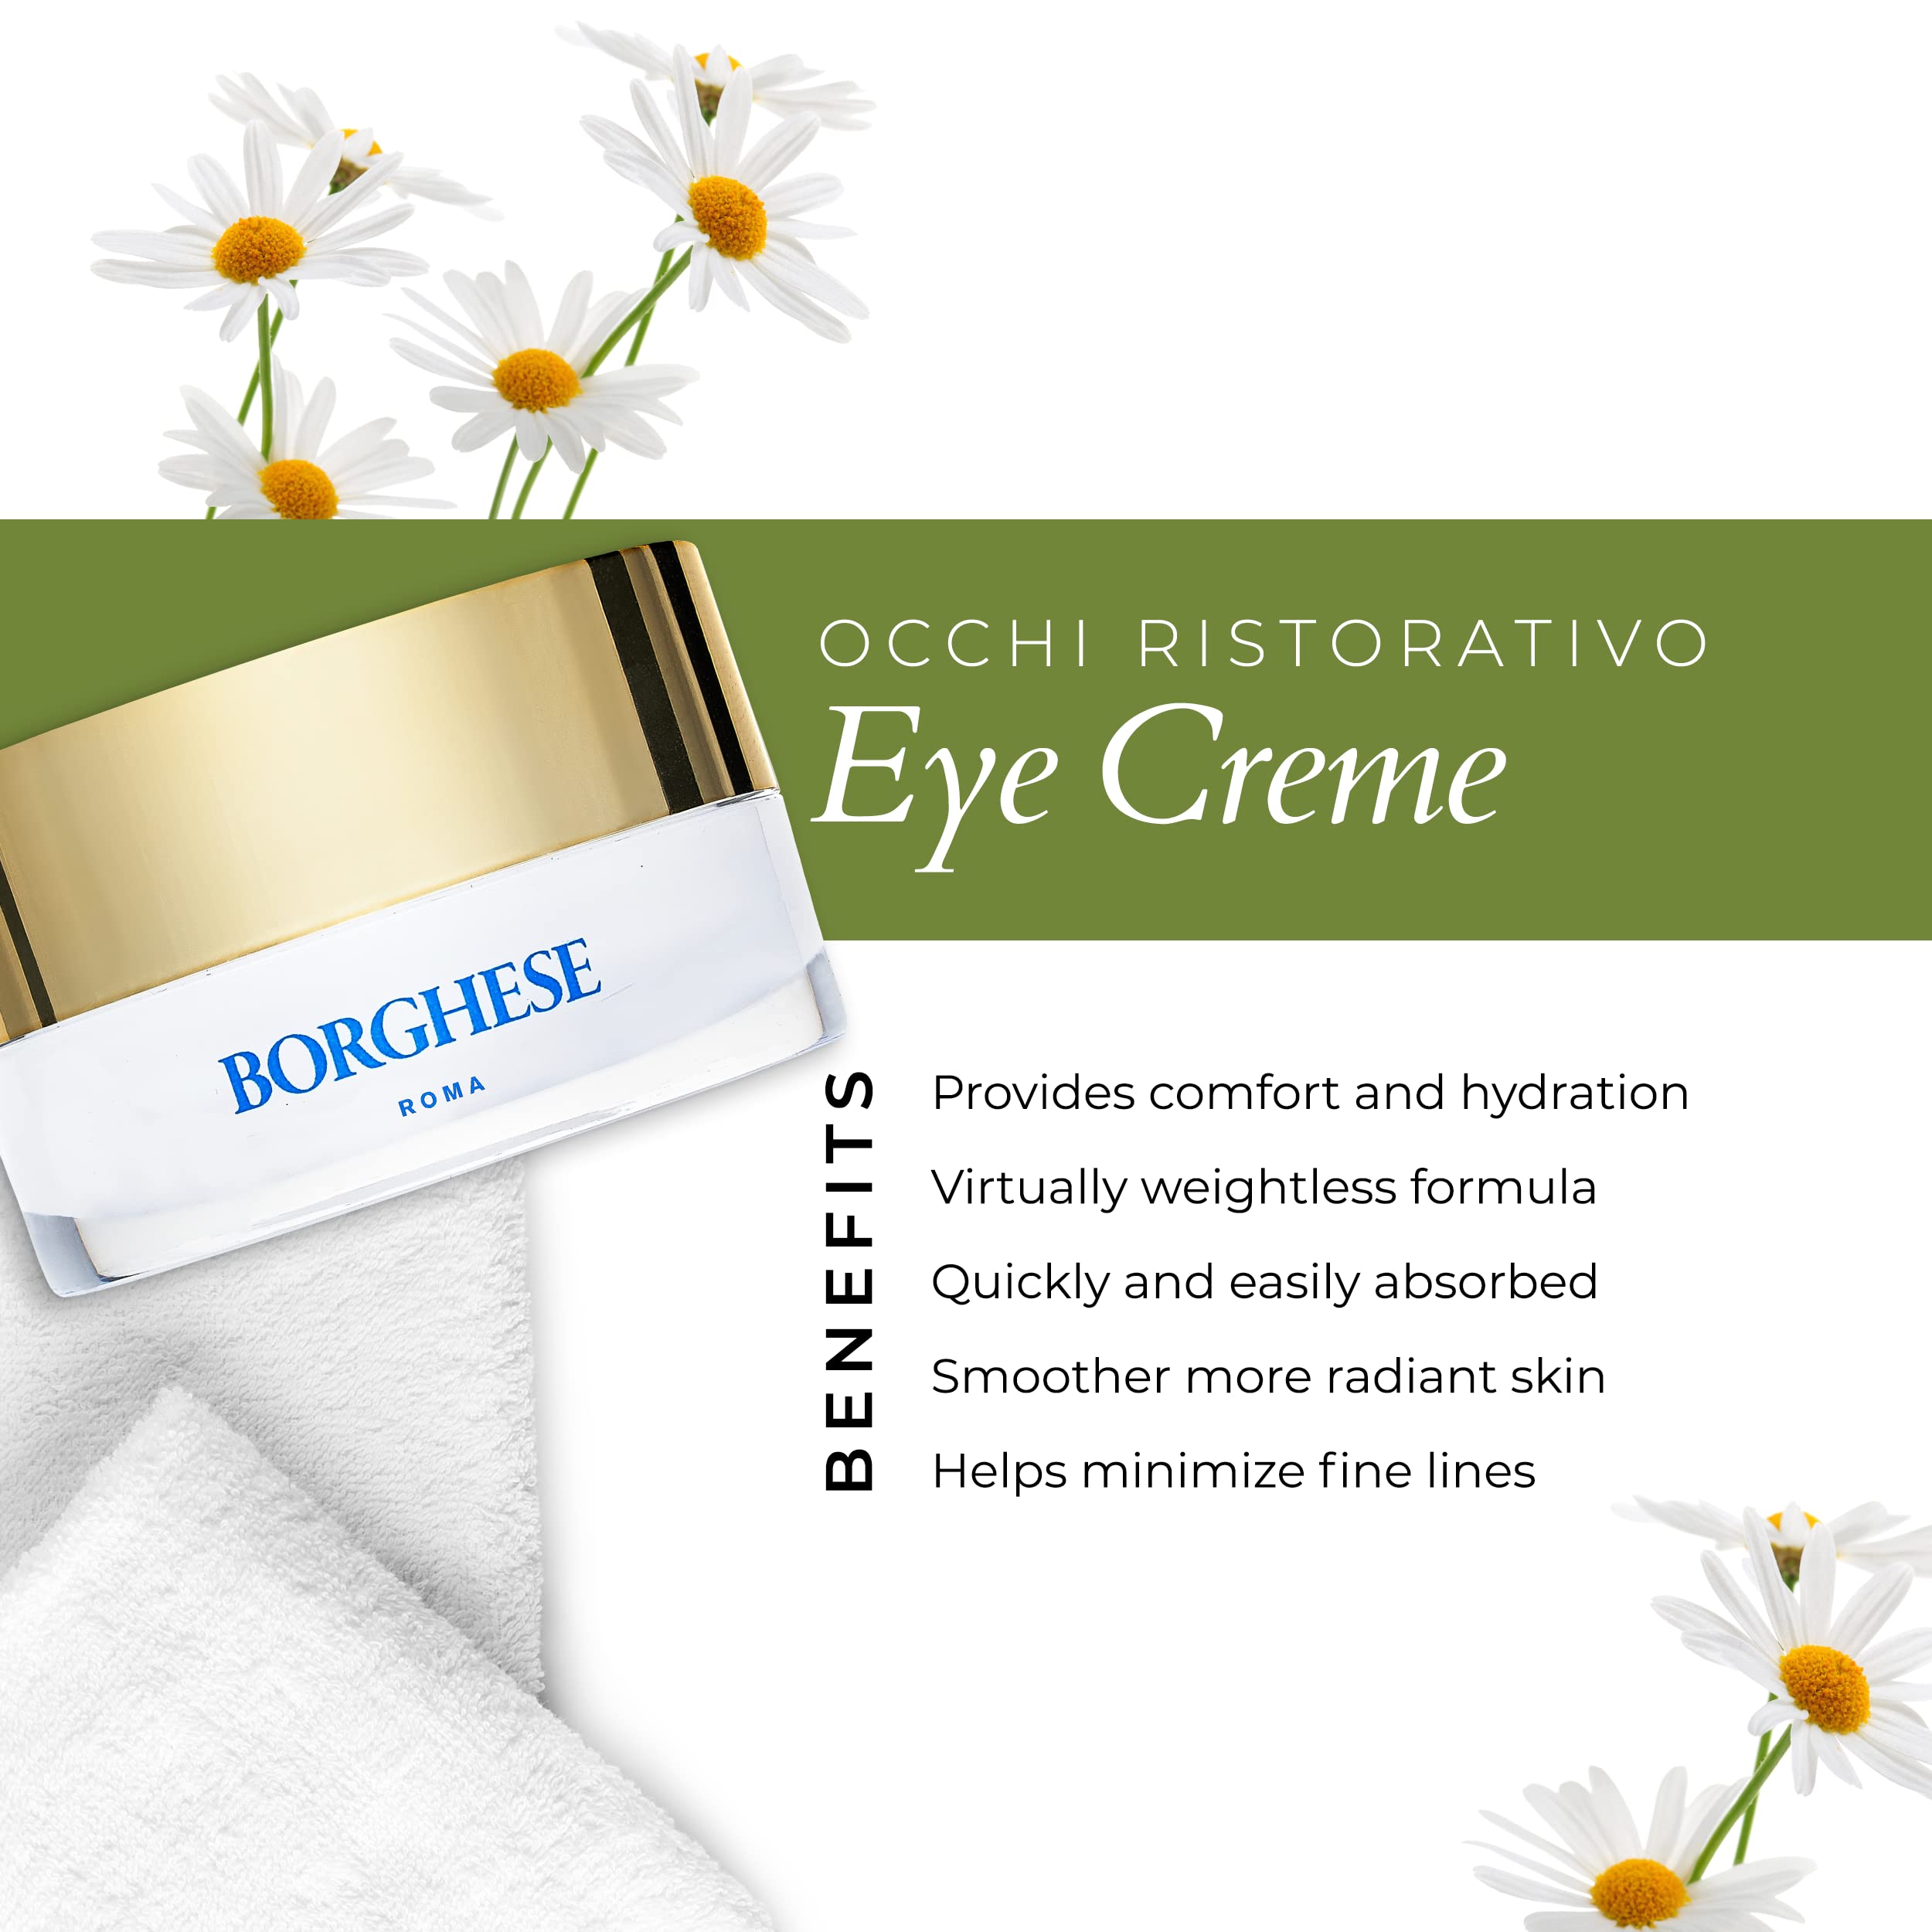 Borghese Occhi Ristorativo Firming Eye Cream For All Skin Types, 0.5 Oz